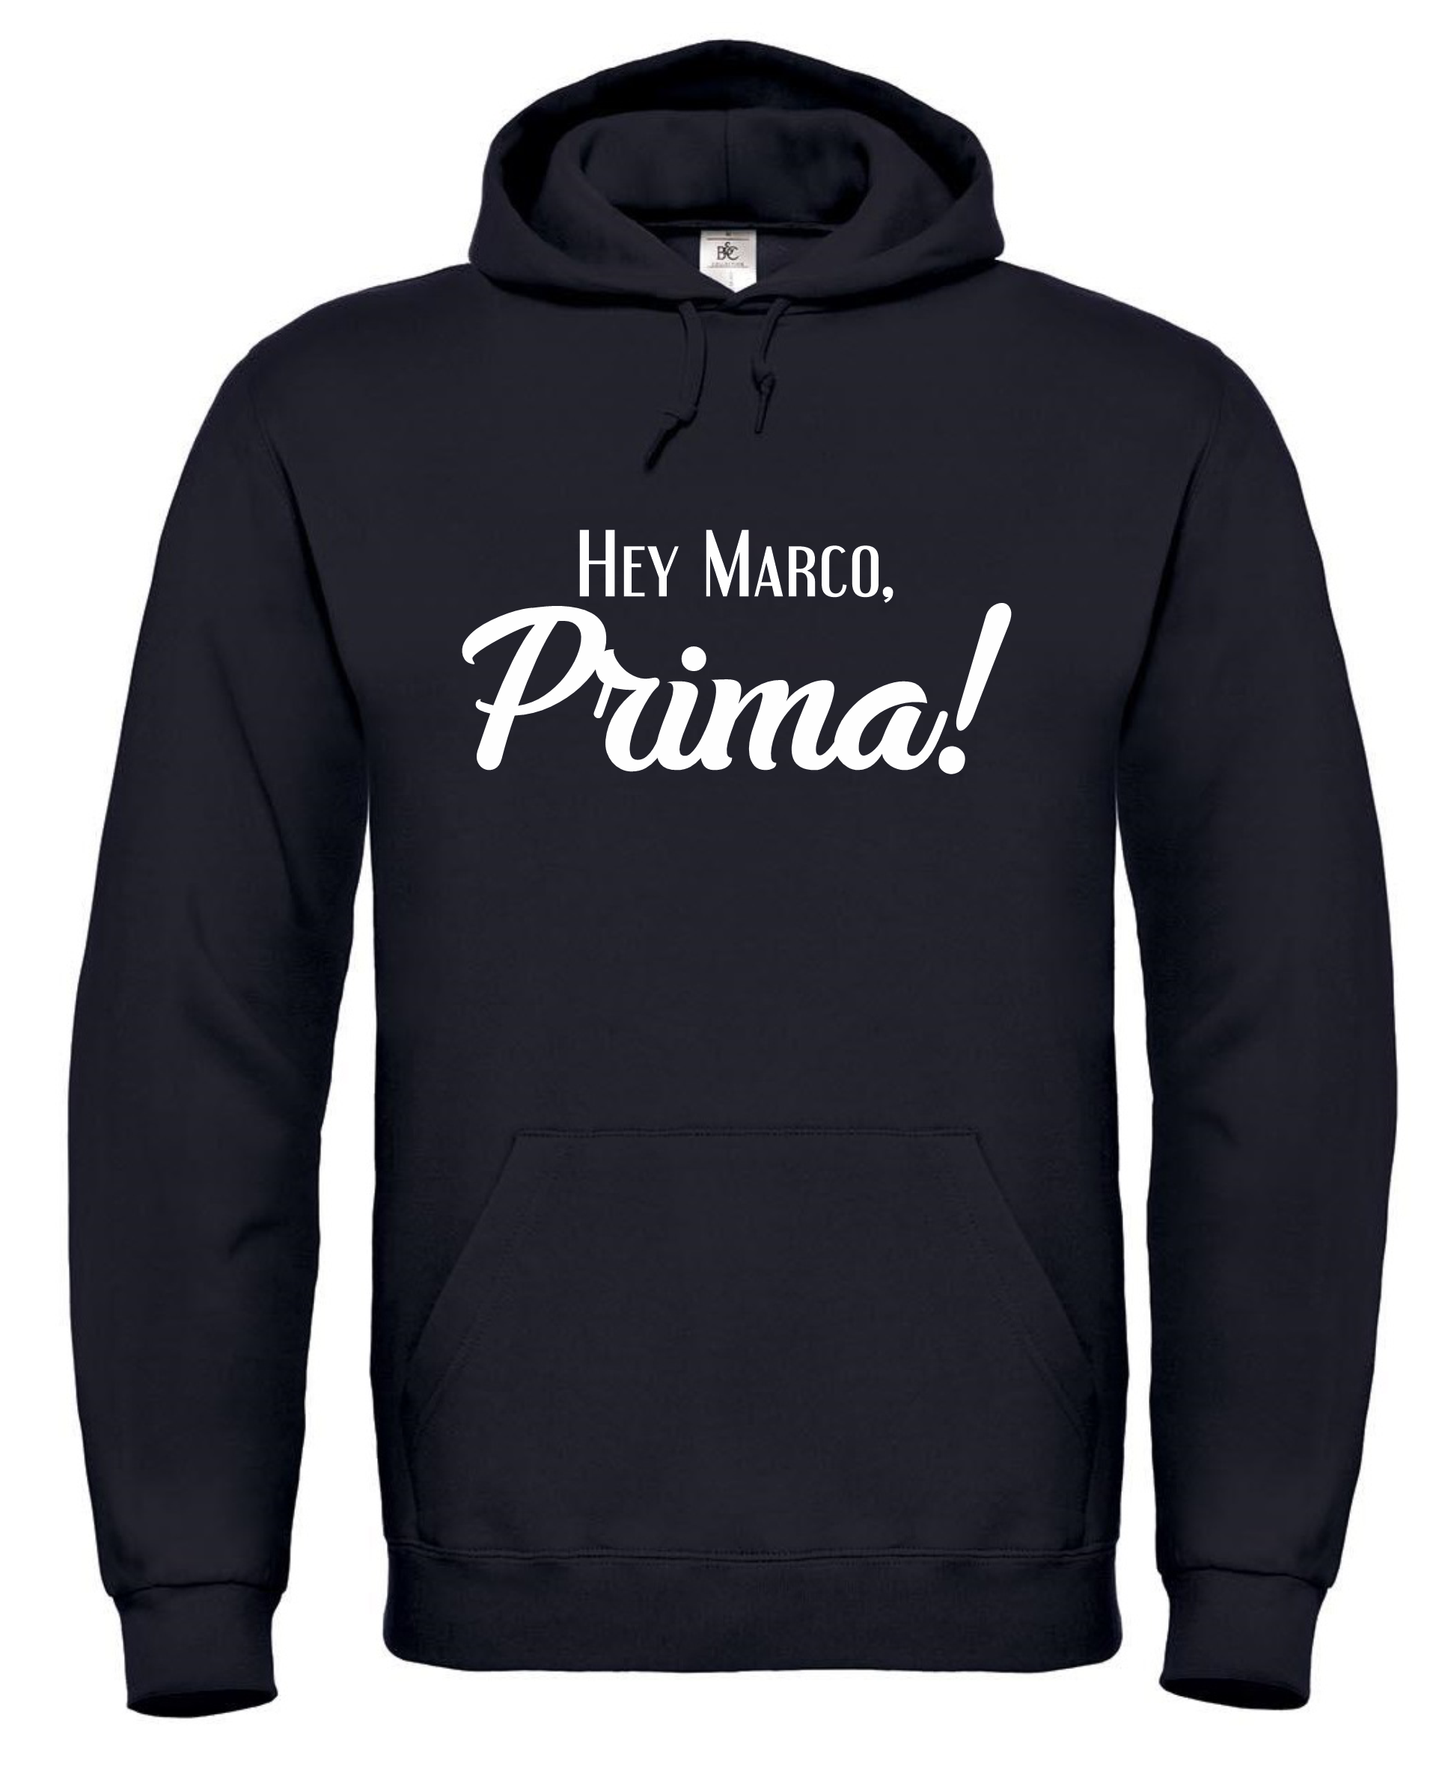 Hey Marco, Prima! - Hoodie XL